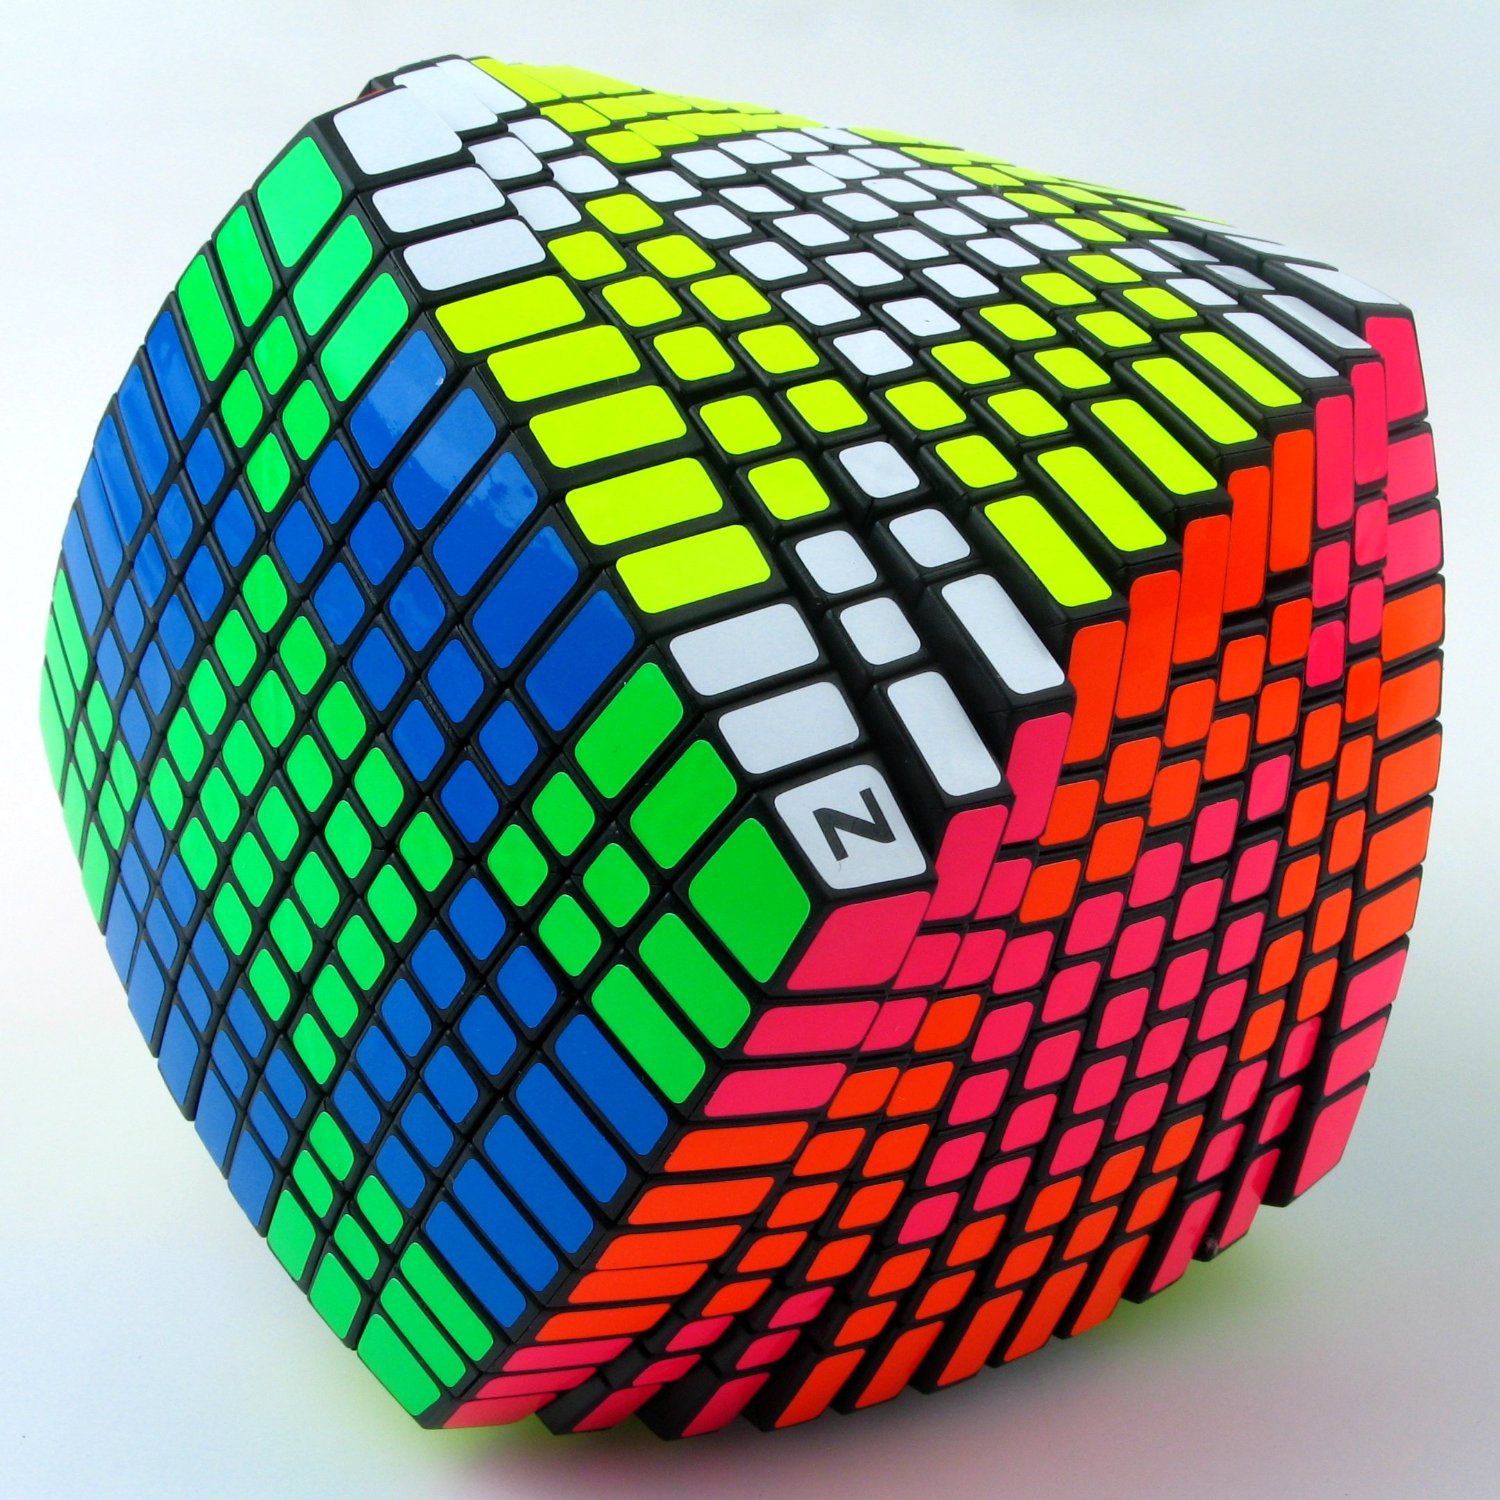 Geek insider, geekinsider, geekinsider. Com,, ridiculous rubik's cube is an 11x11puzzle-solving pain fest, living